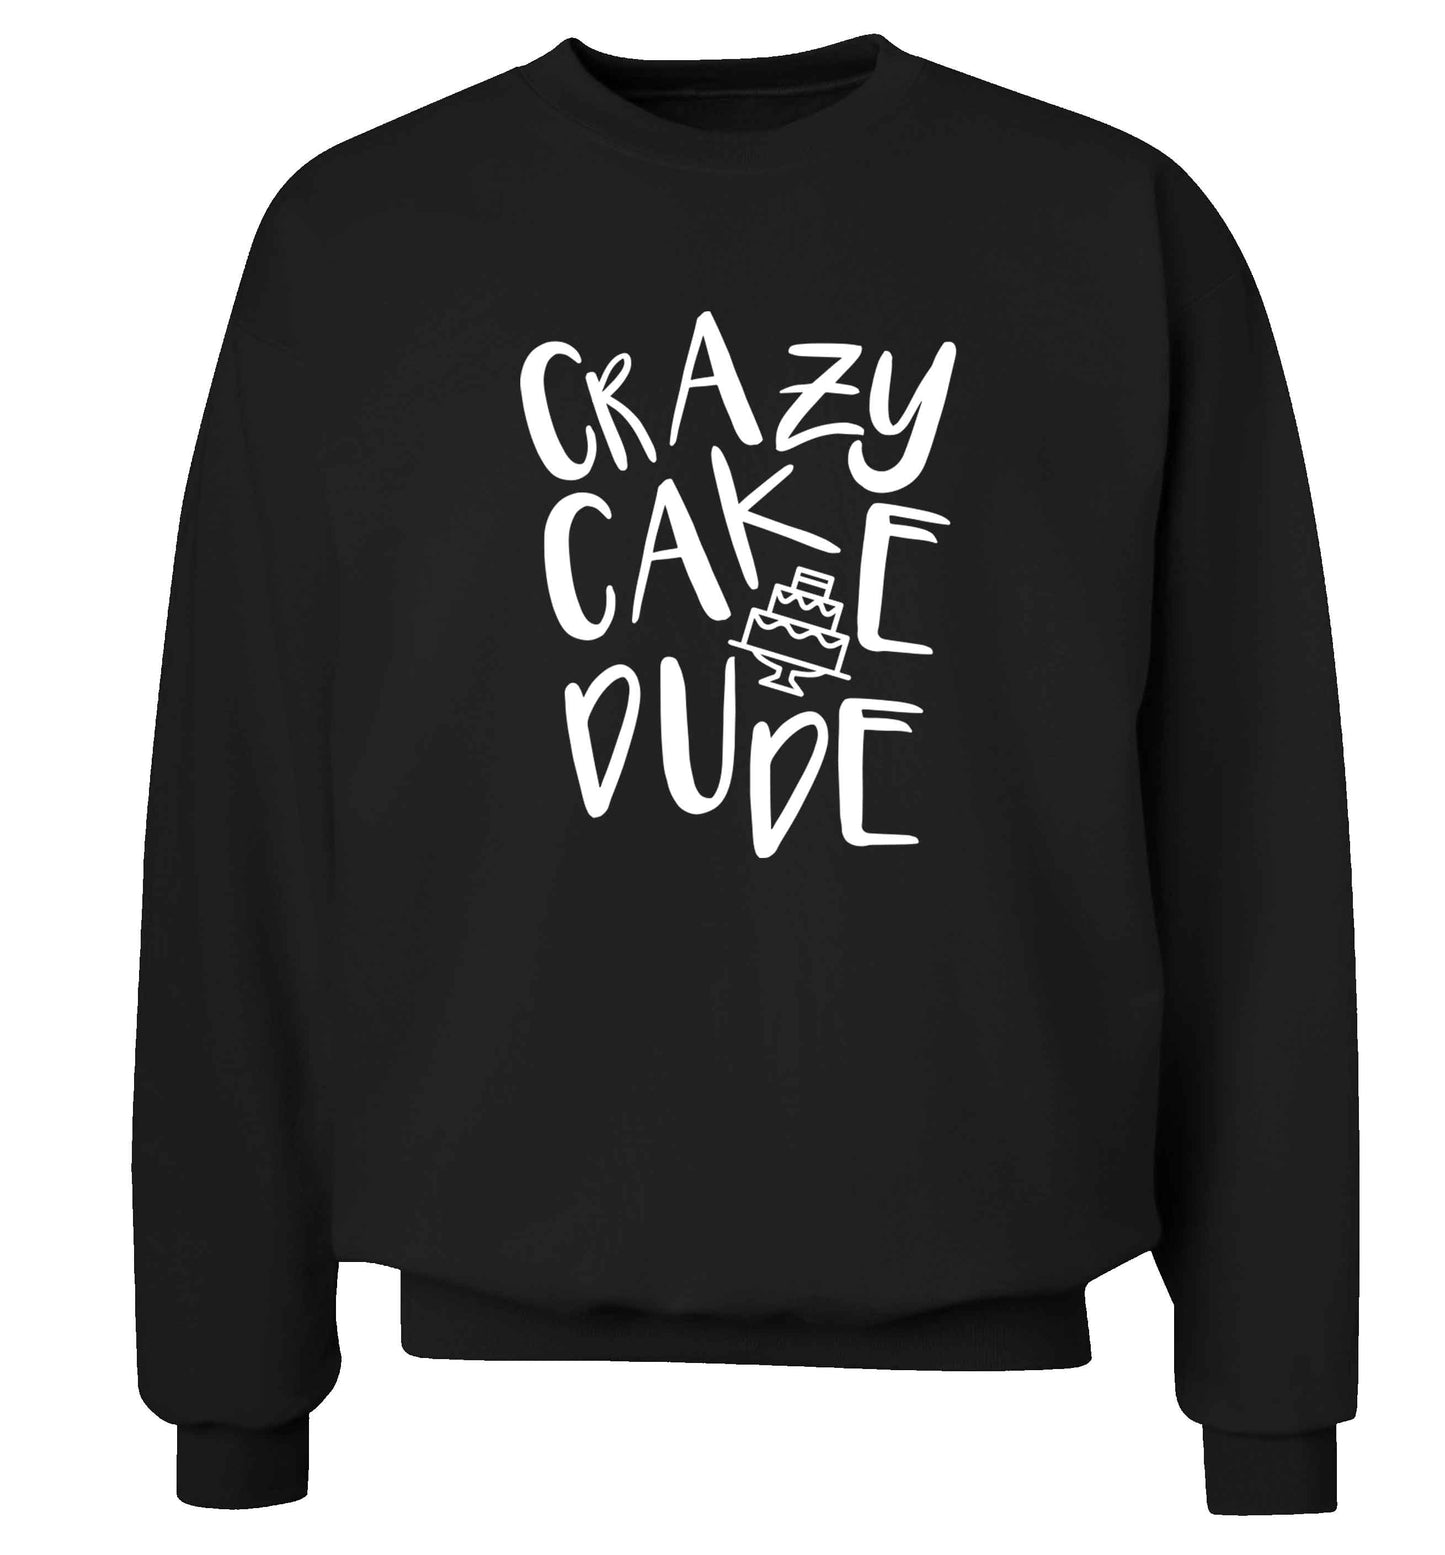 Crazy cake dude Adult's unisex black Sweater 2XL